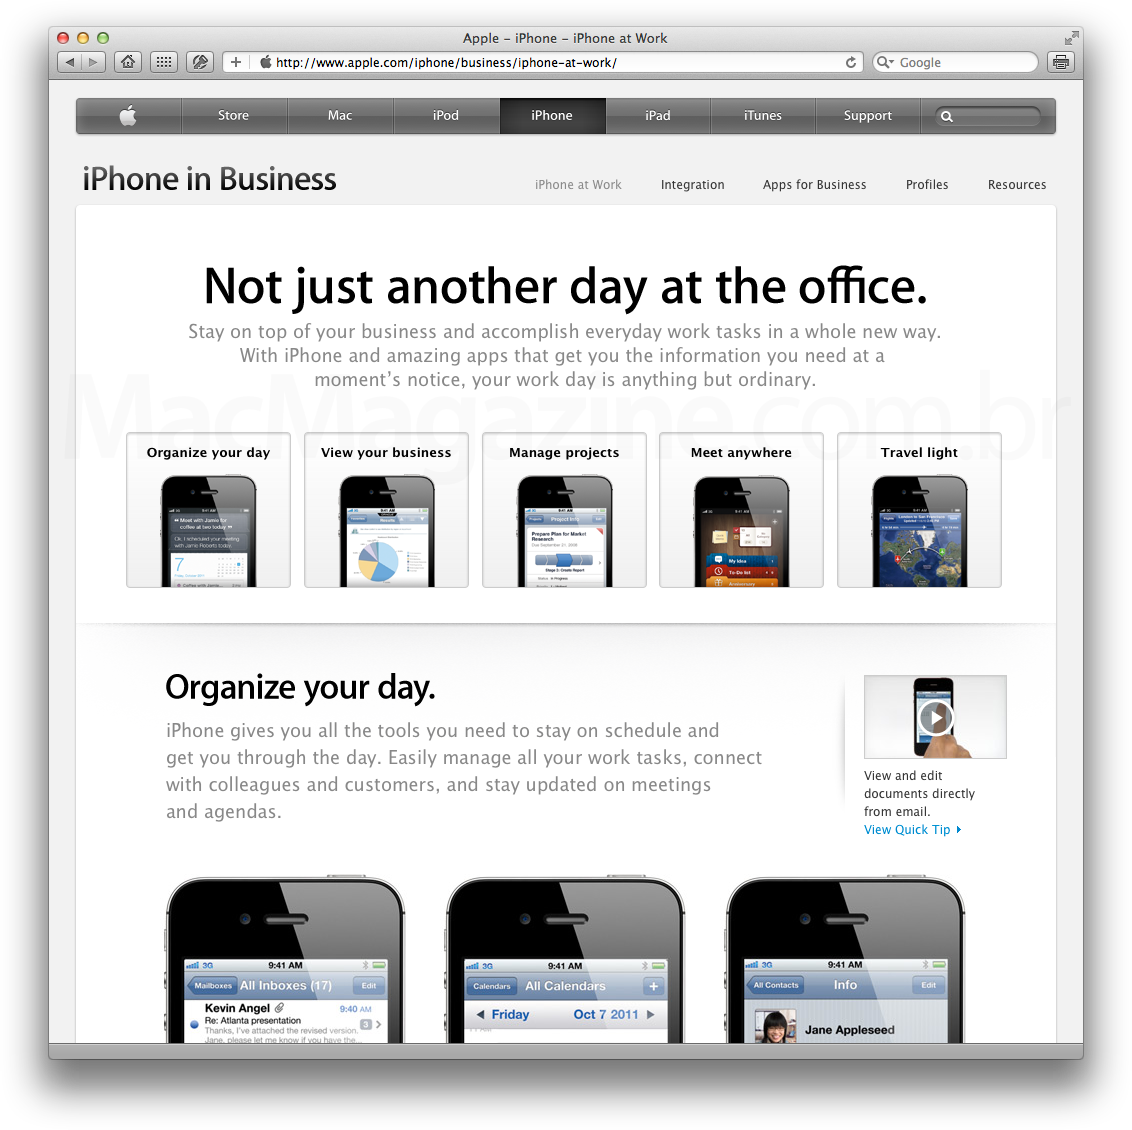 Apple.com - iPhone at Work